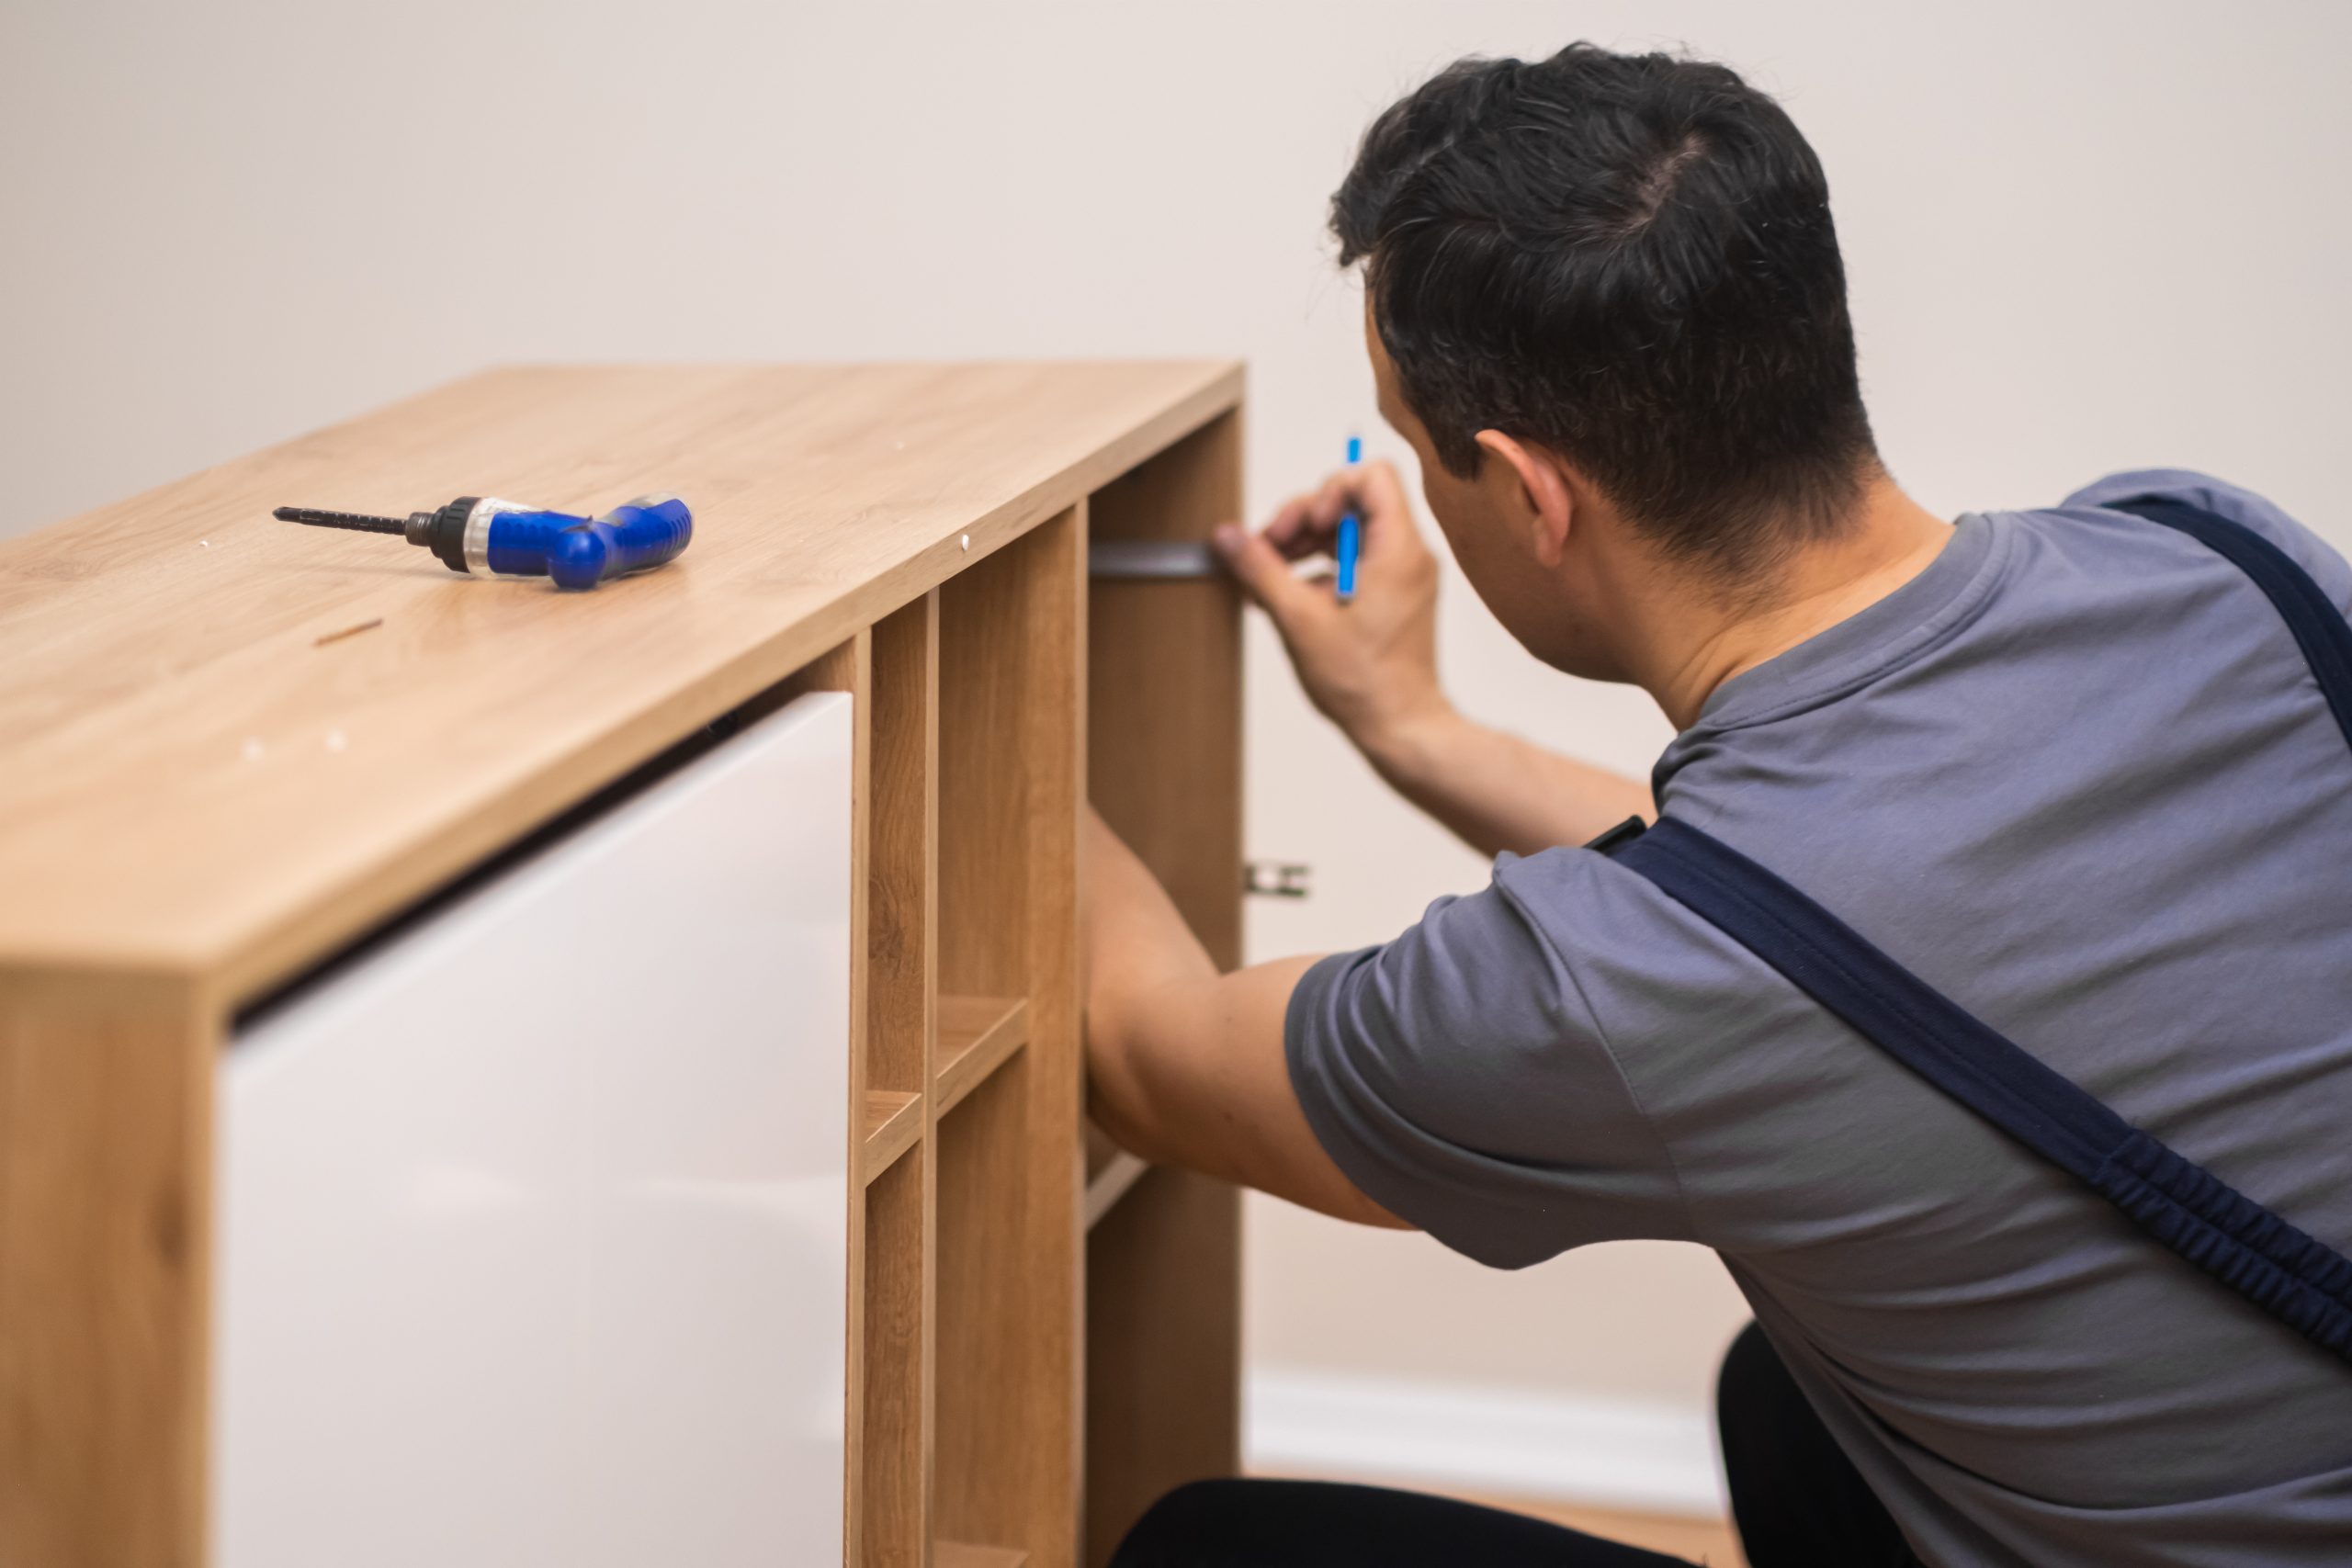 furniture manufacturing fixing carpenter hands installing shelves wooden furniture scaled